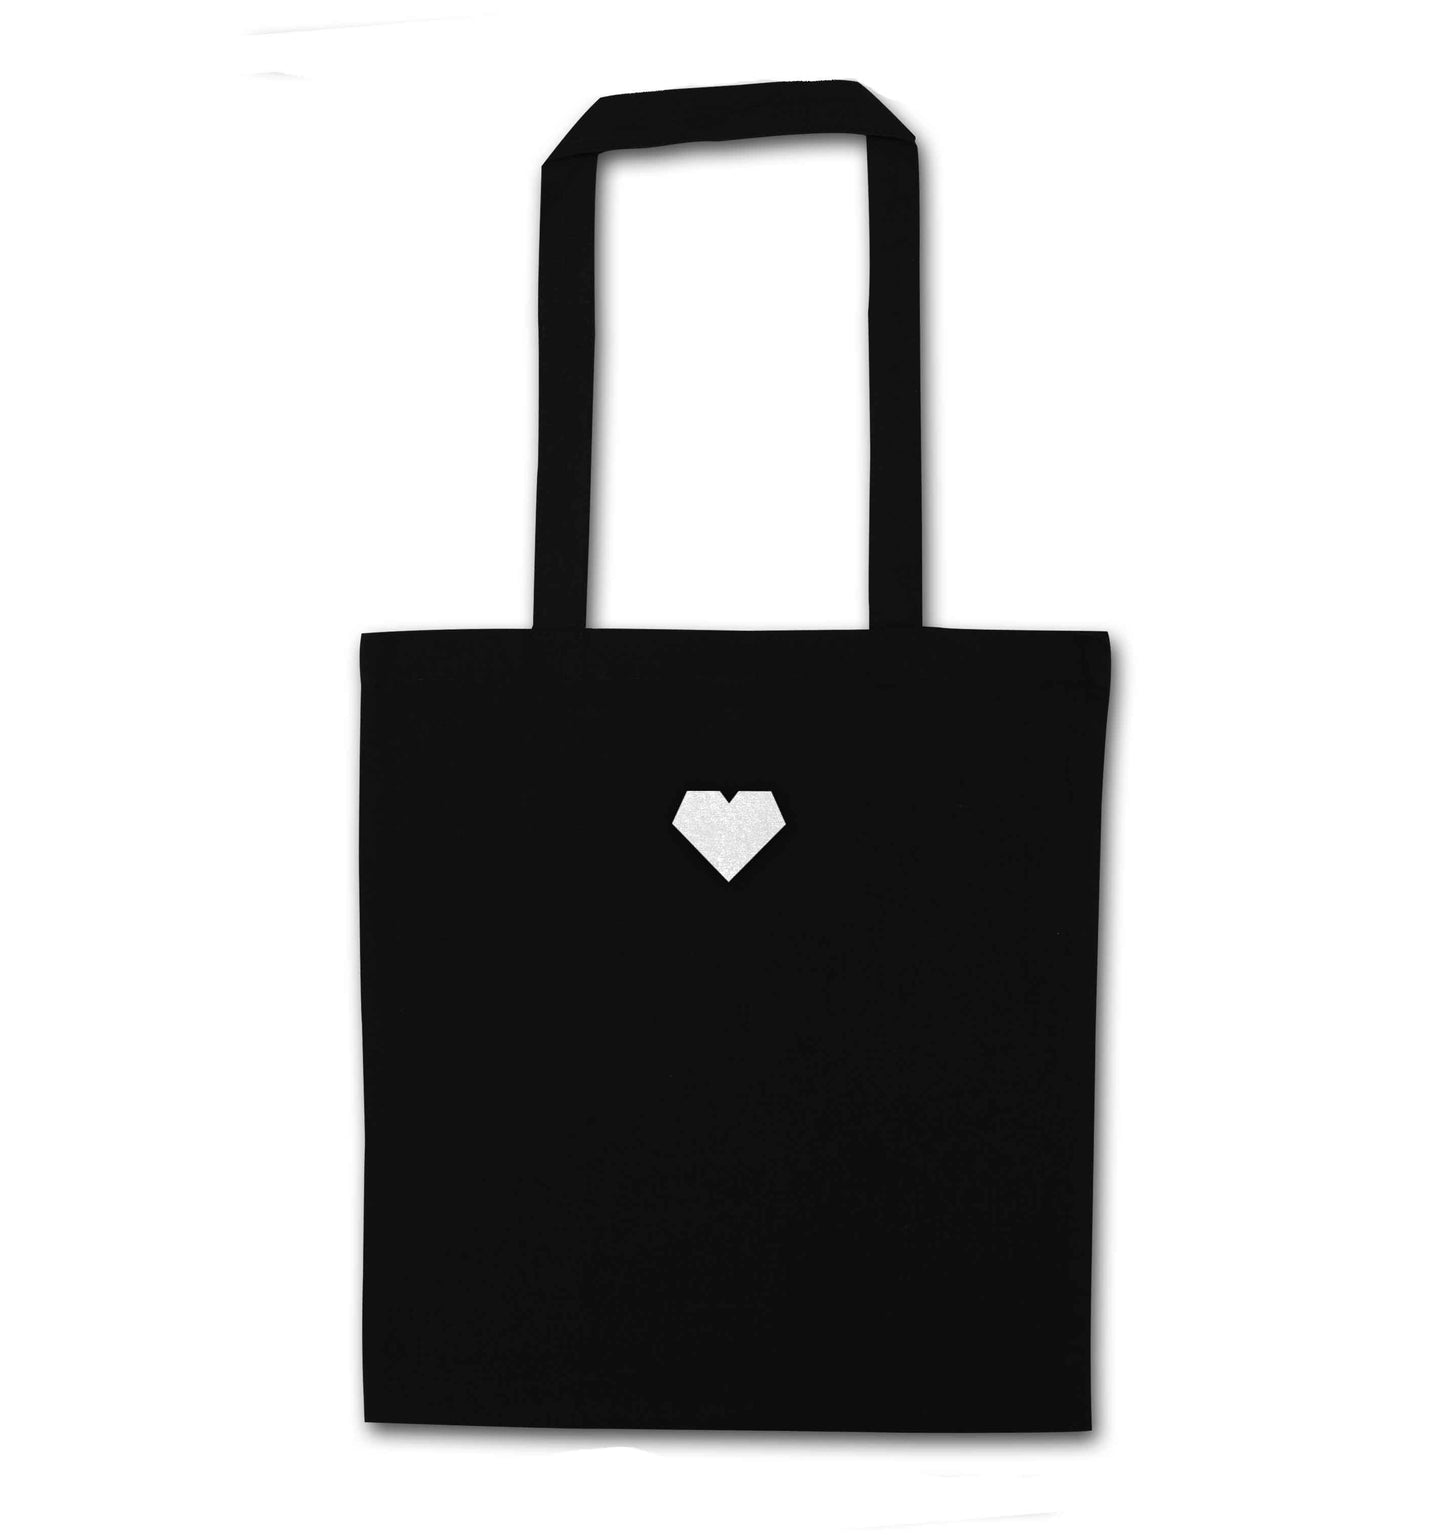 Tiny heart black tote bag